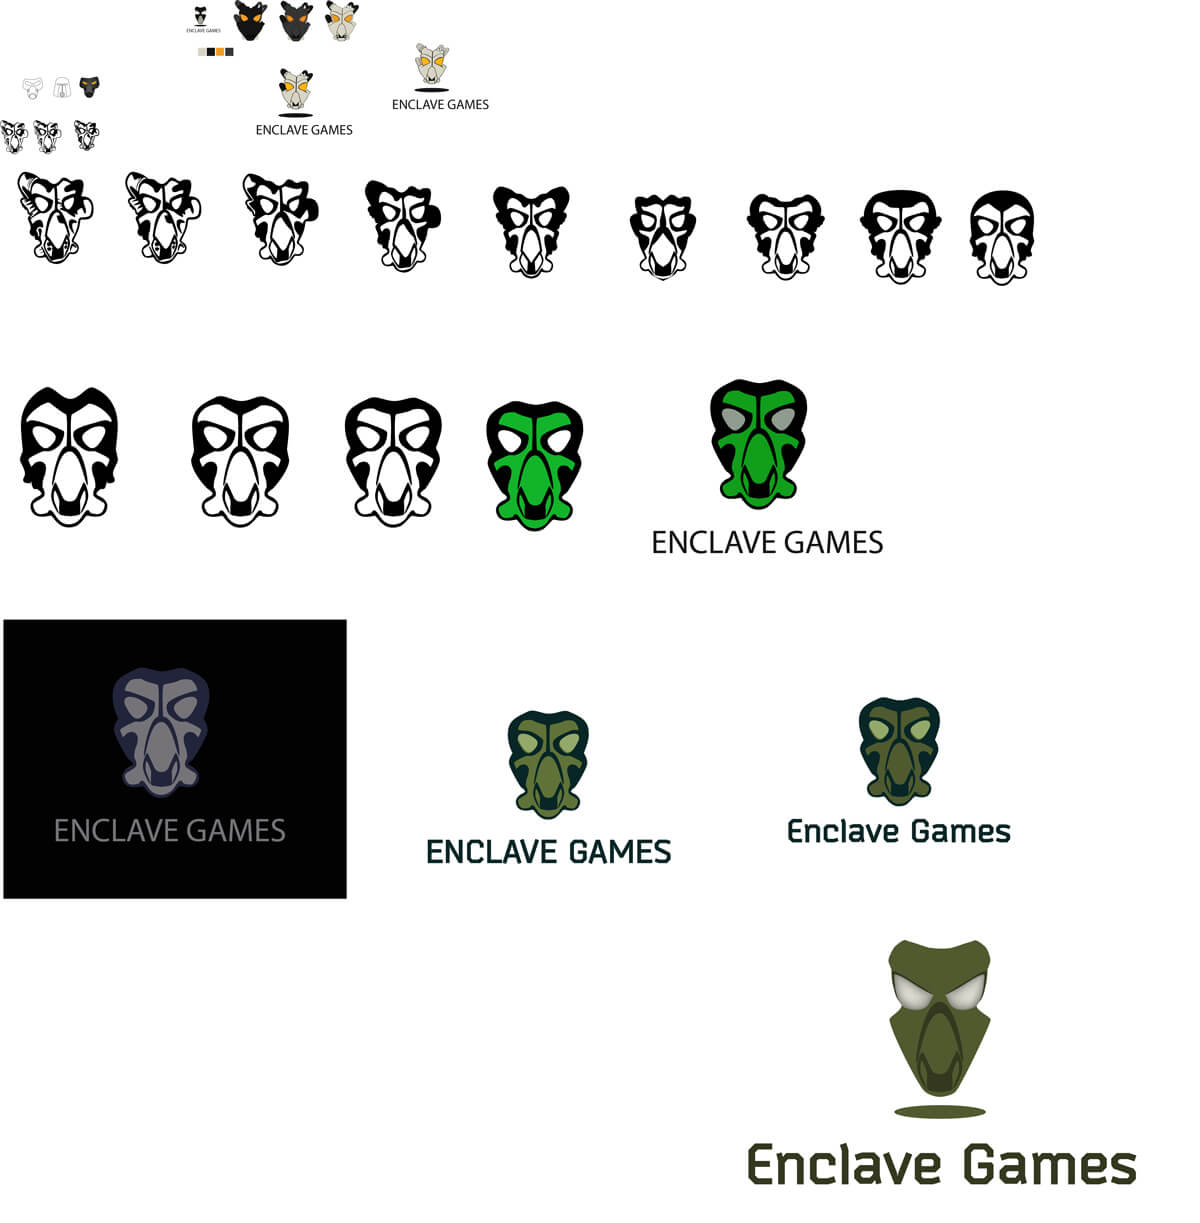 Enclave Games - various logos